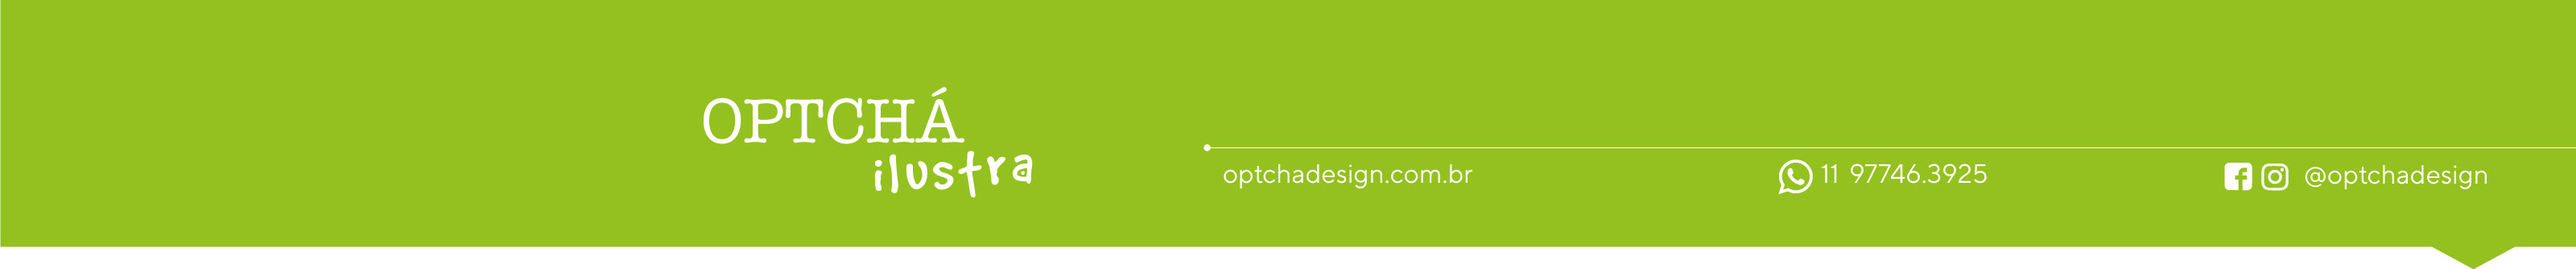 Optchá Ilustra's profile banner